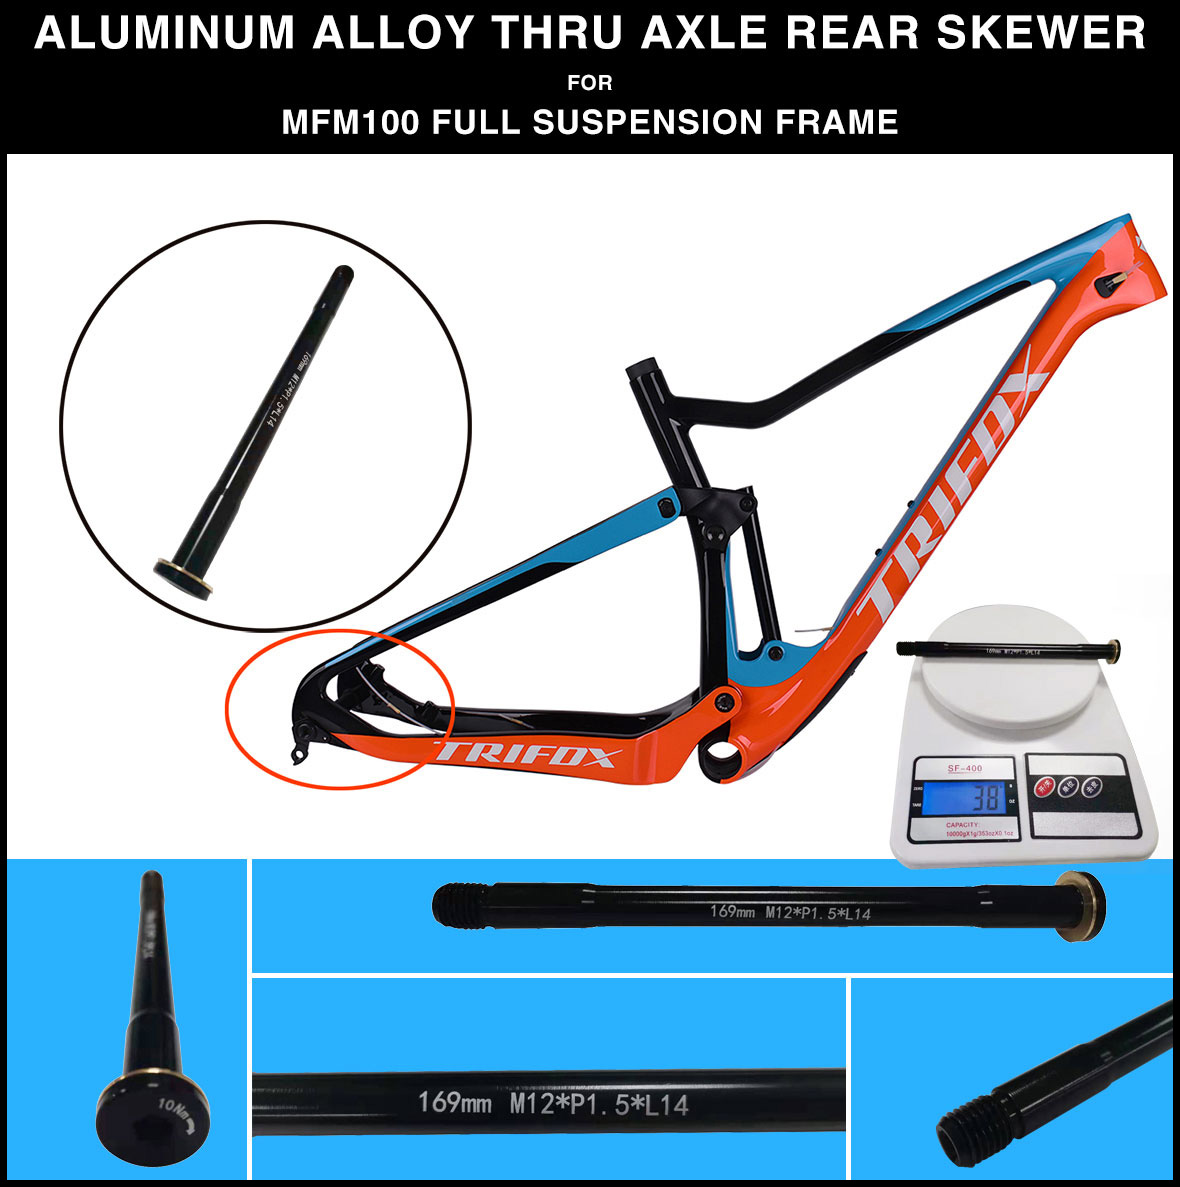 Aluminum Alloy Rear Axle Skewer ATS100 Details